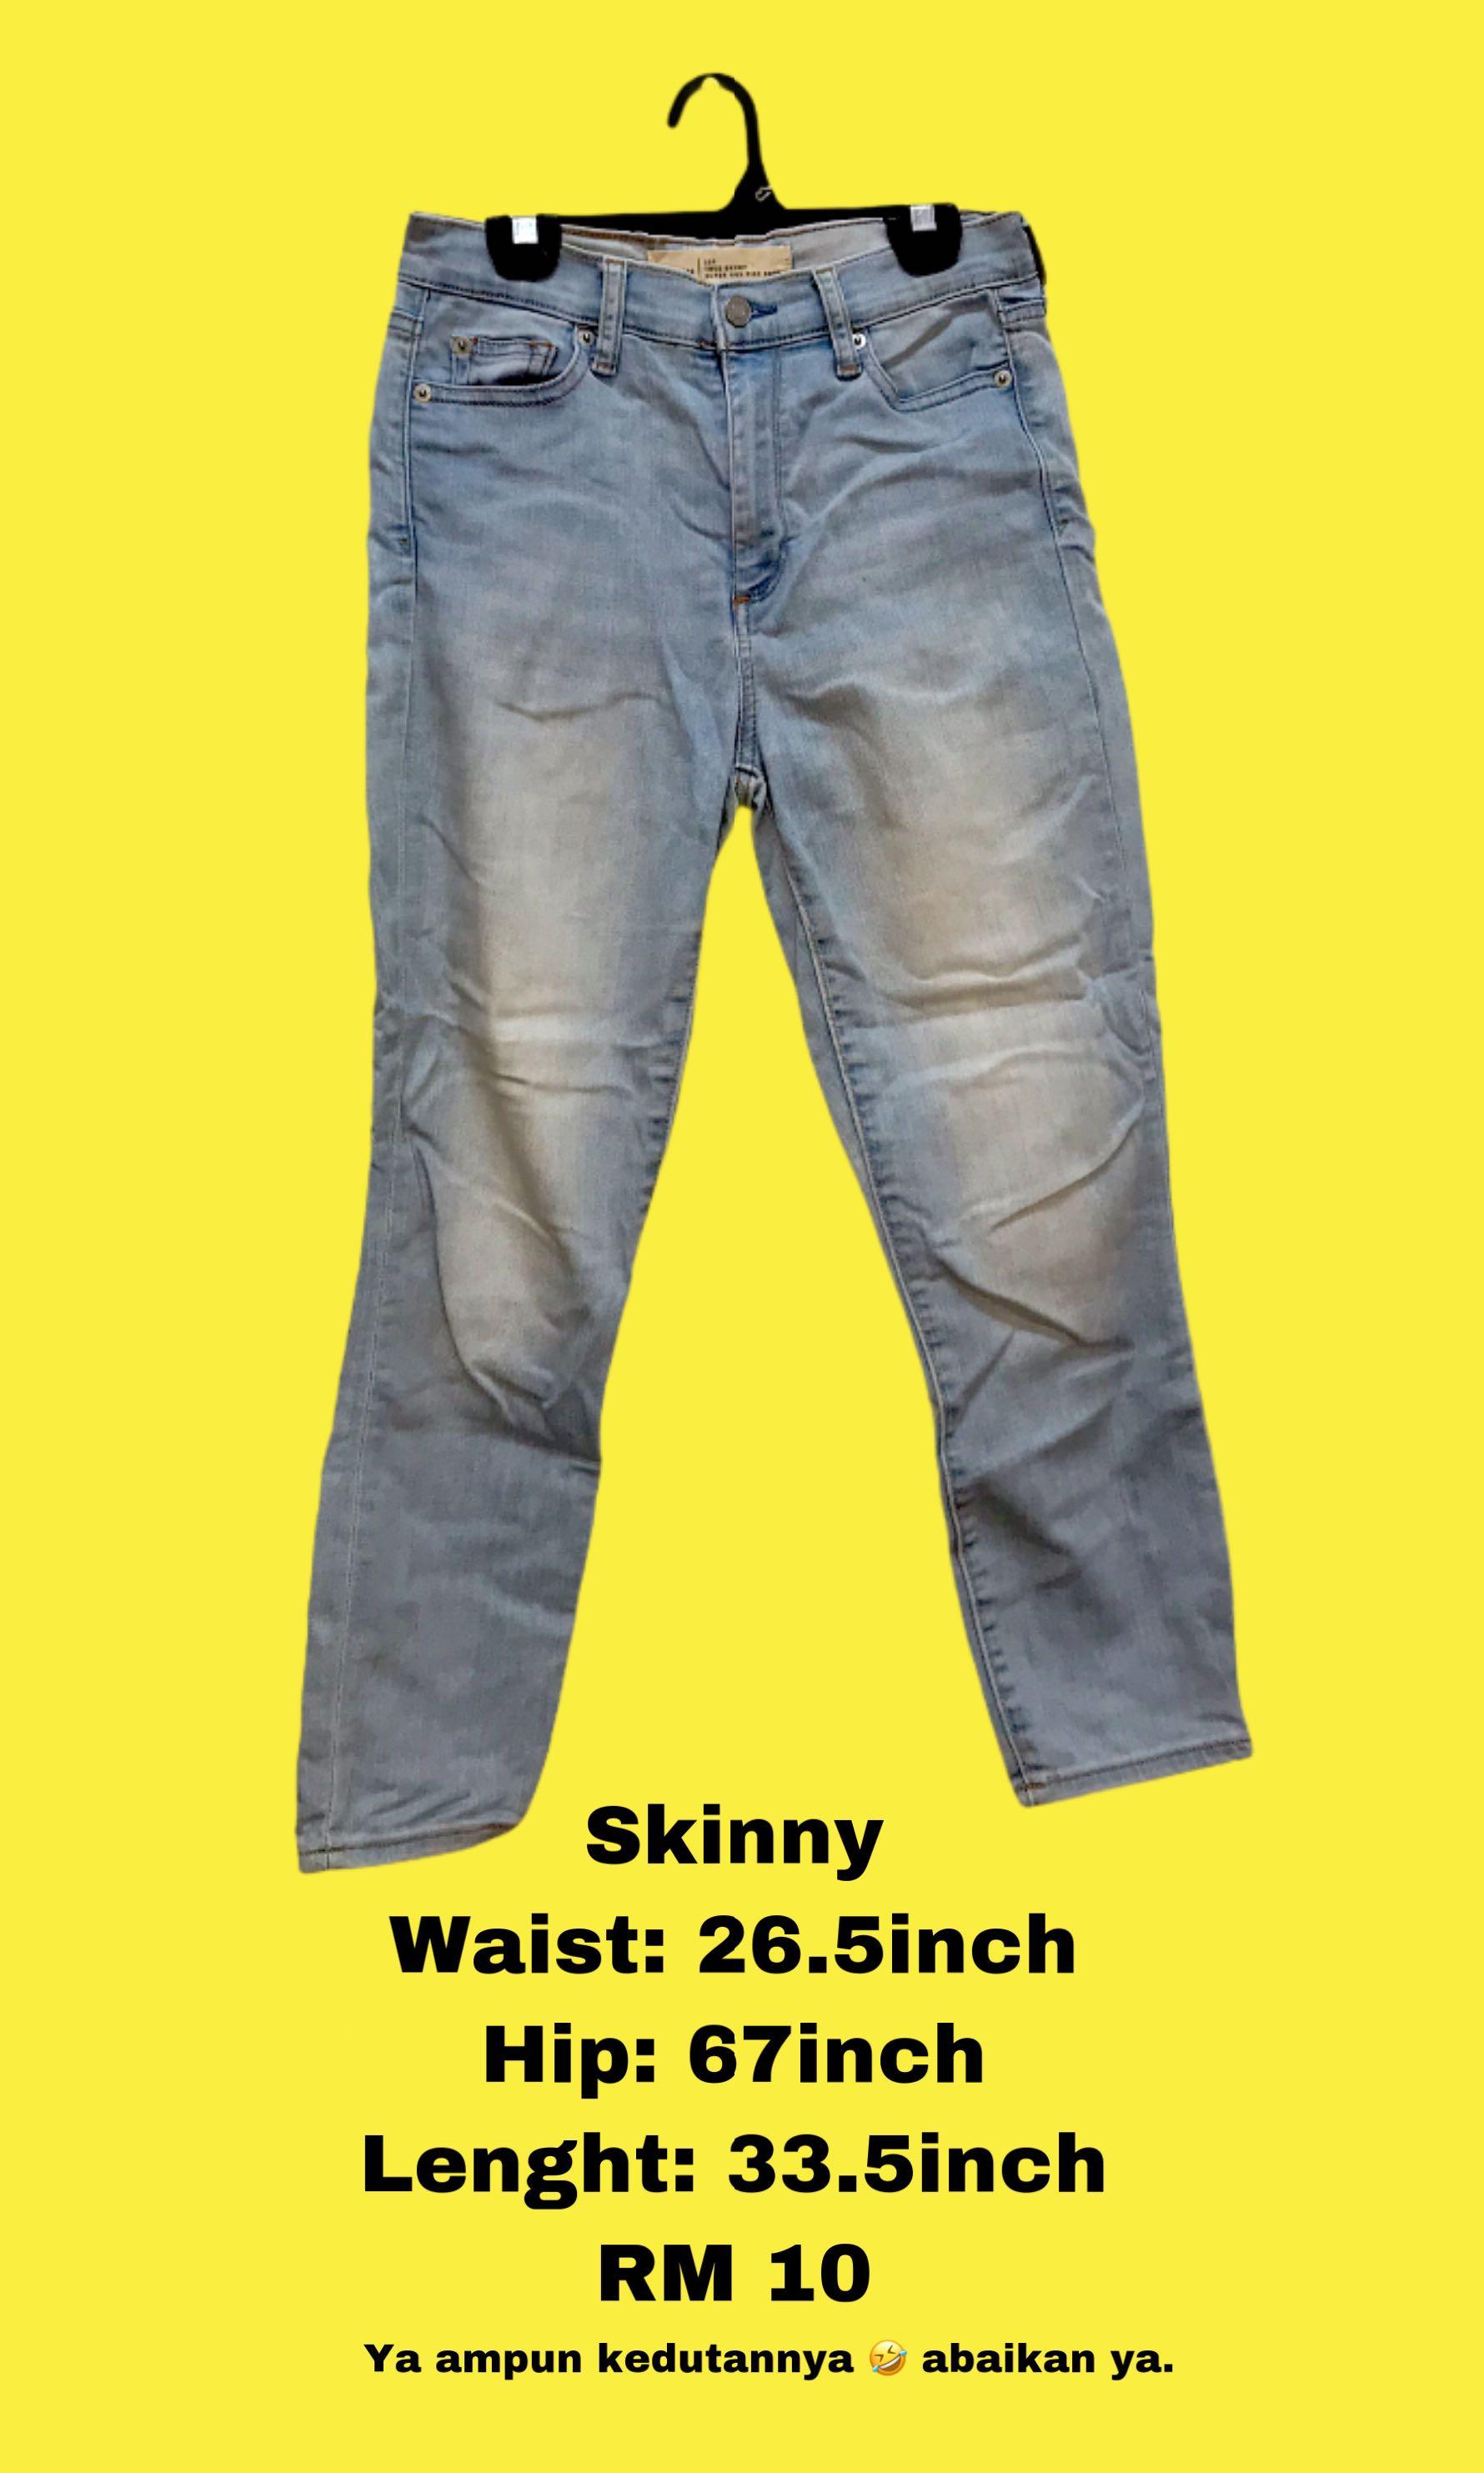 https://media.karousell.com/media/photos/products/2021/4/16/skinny_jeans_gap_1618580684_14a96994_progressive.jpg